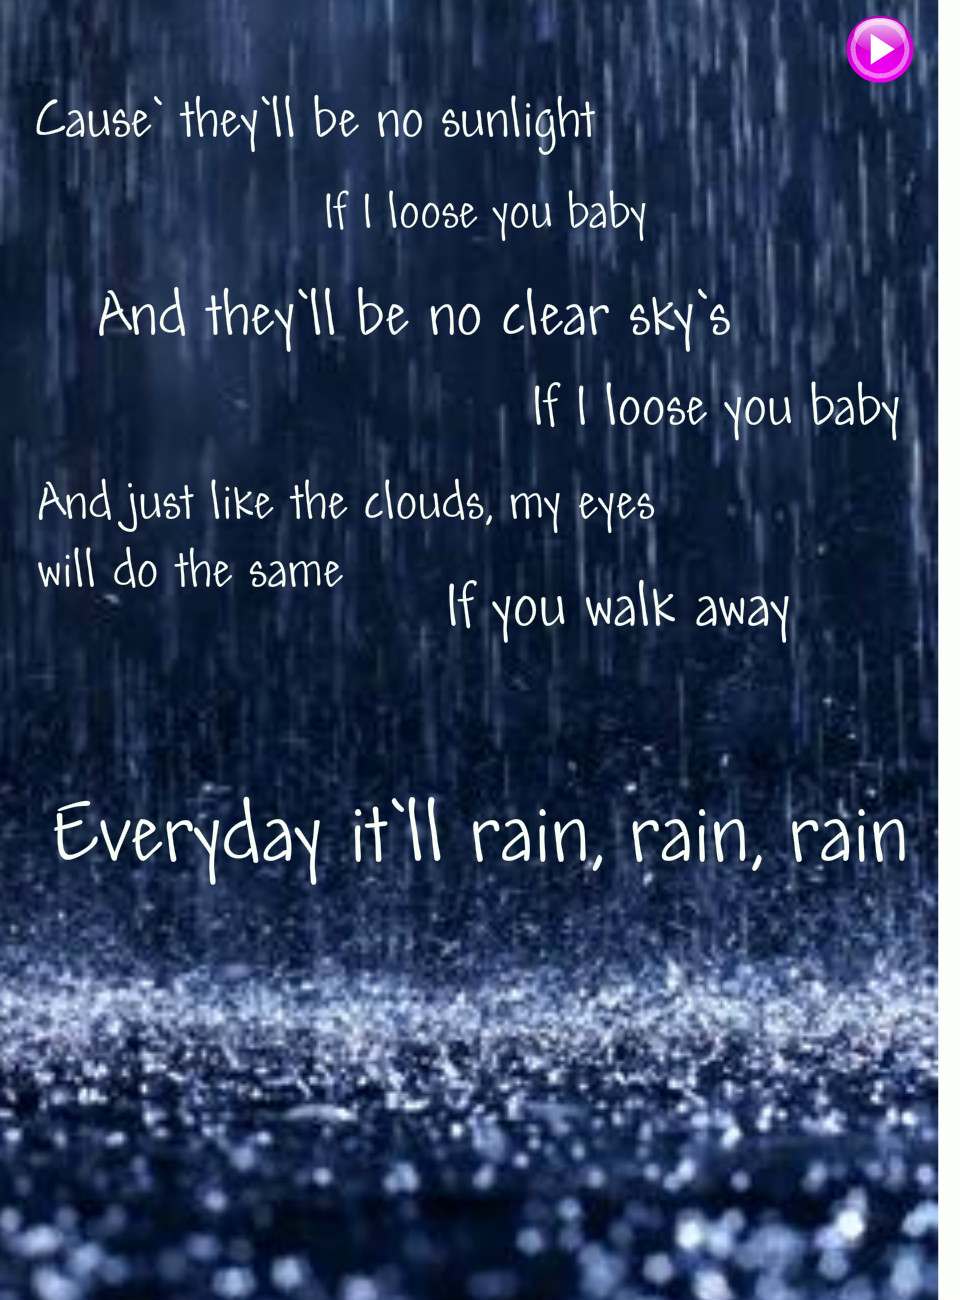 See rain перевод. It will Rain. It will Rain перевод. Every Day Rain исполнитель. Every Day Rain надпись.